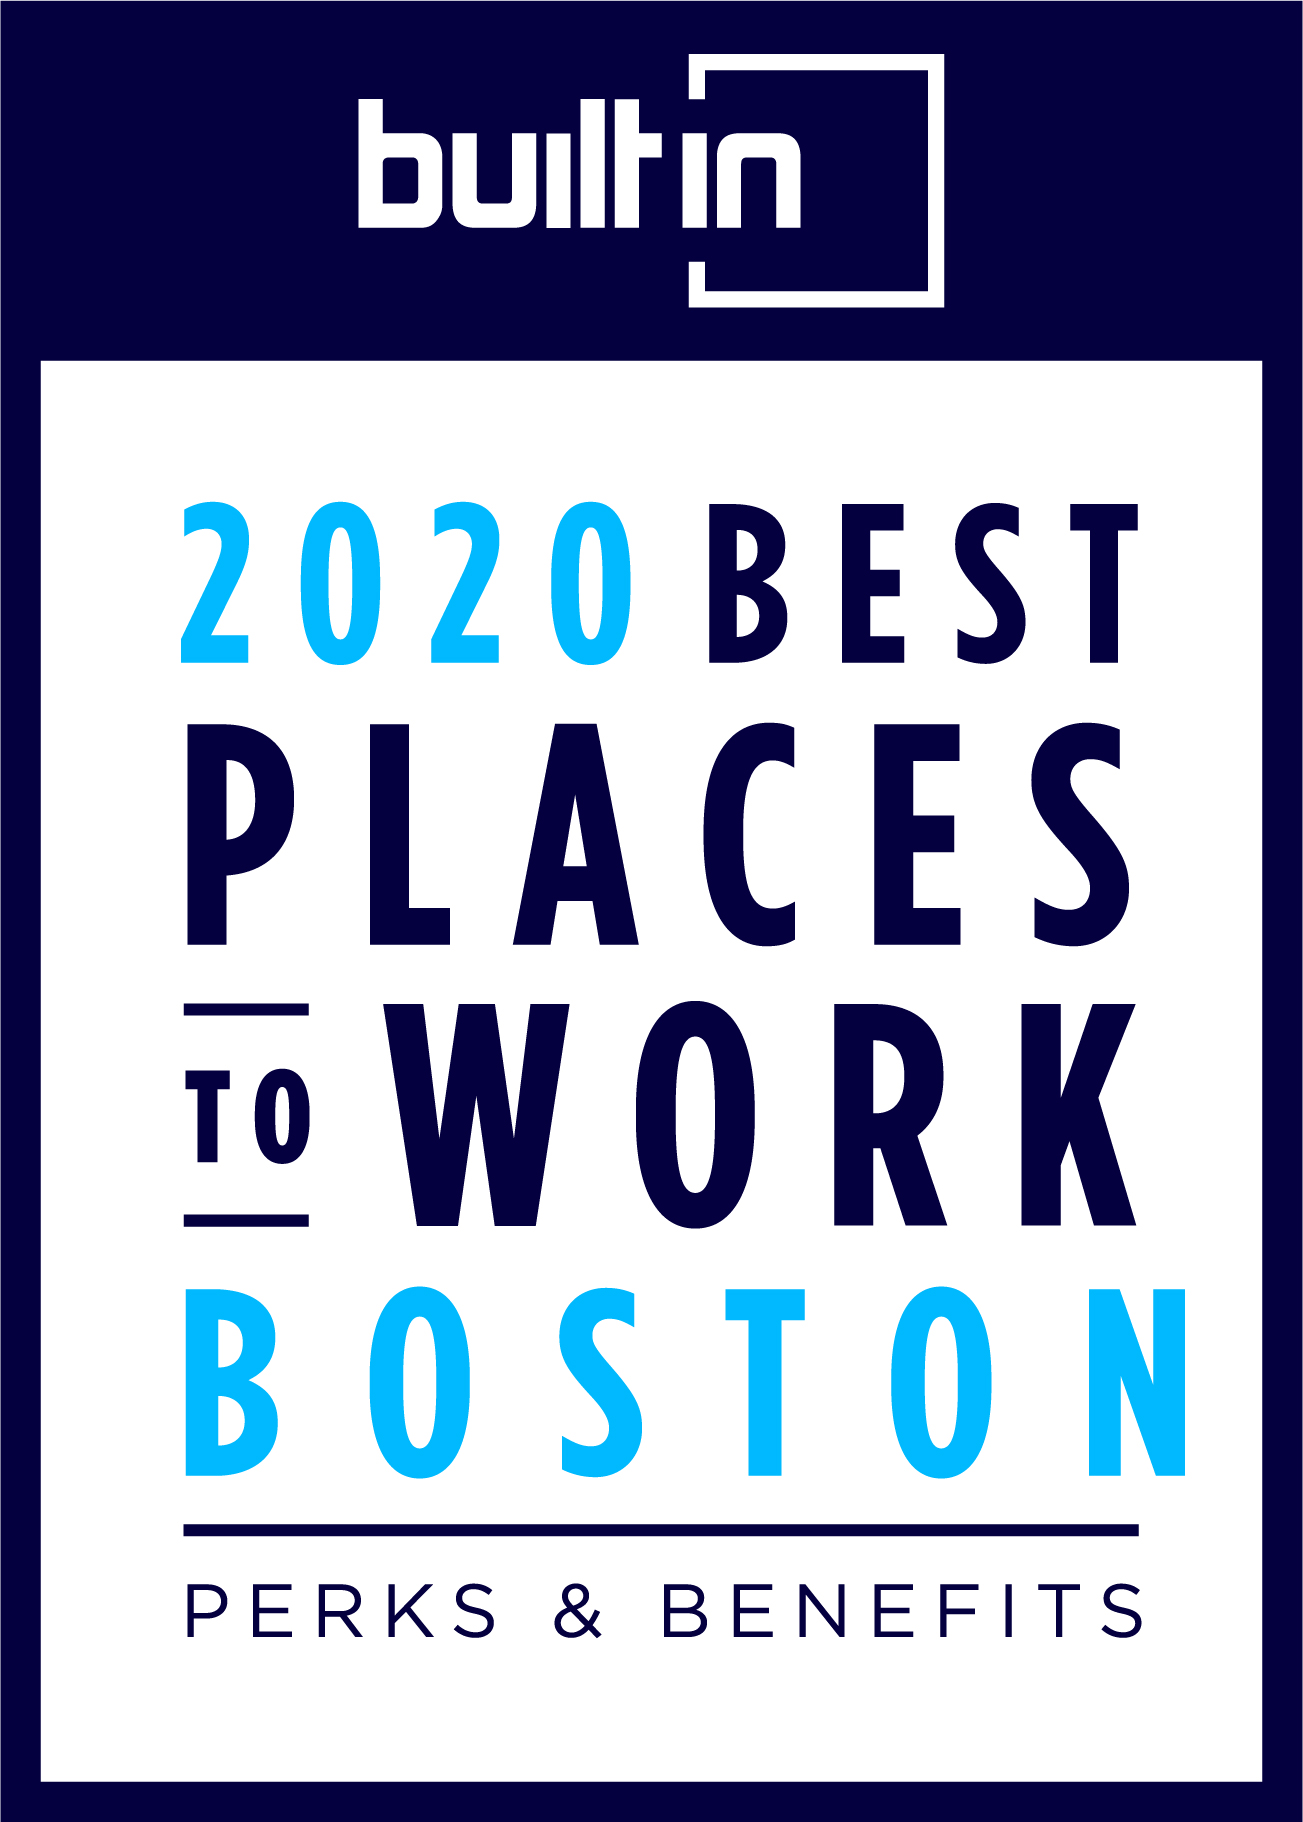 BPTW_benefits_Badge_Boston_Vertical.jpg